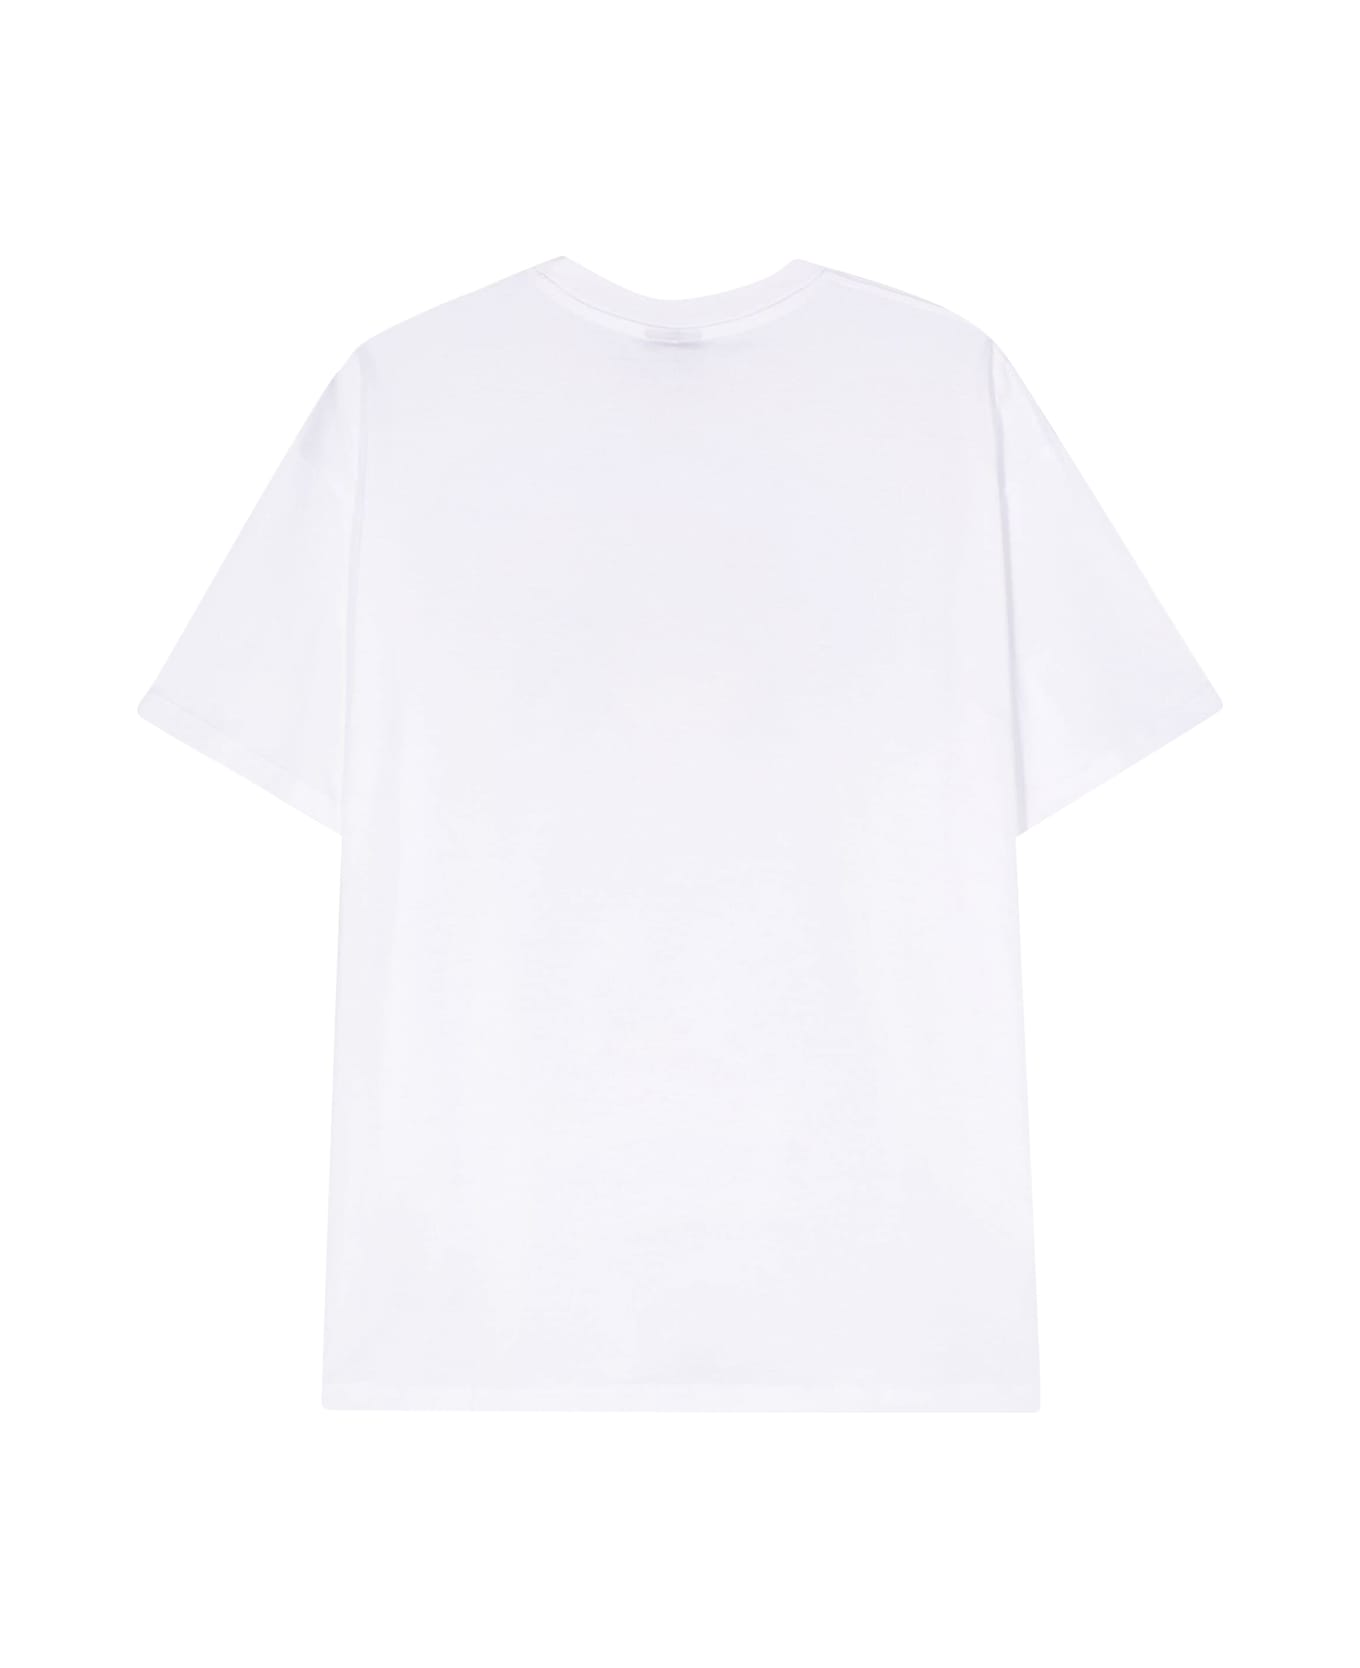 Paul&Shark T-shirt Cotton - White シャツ